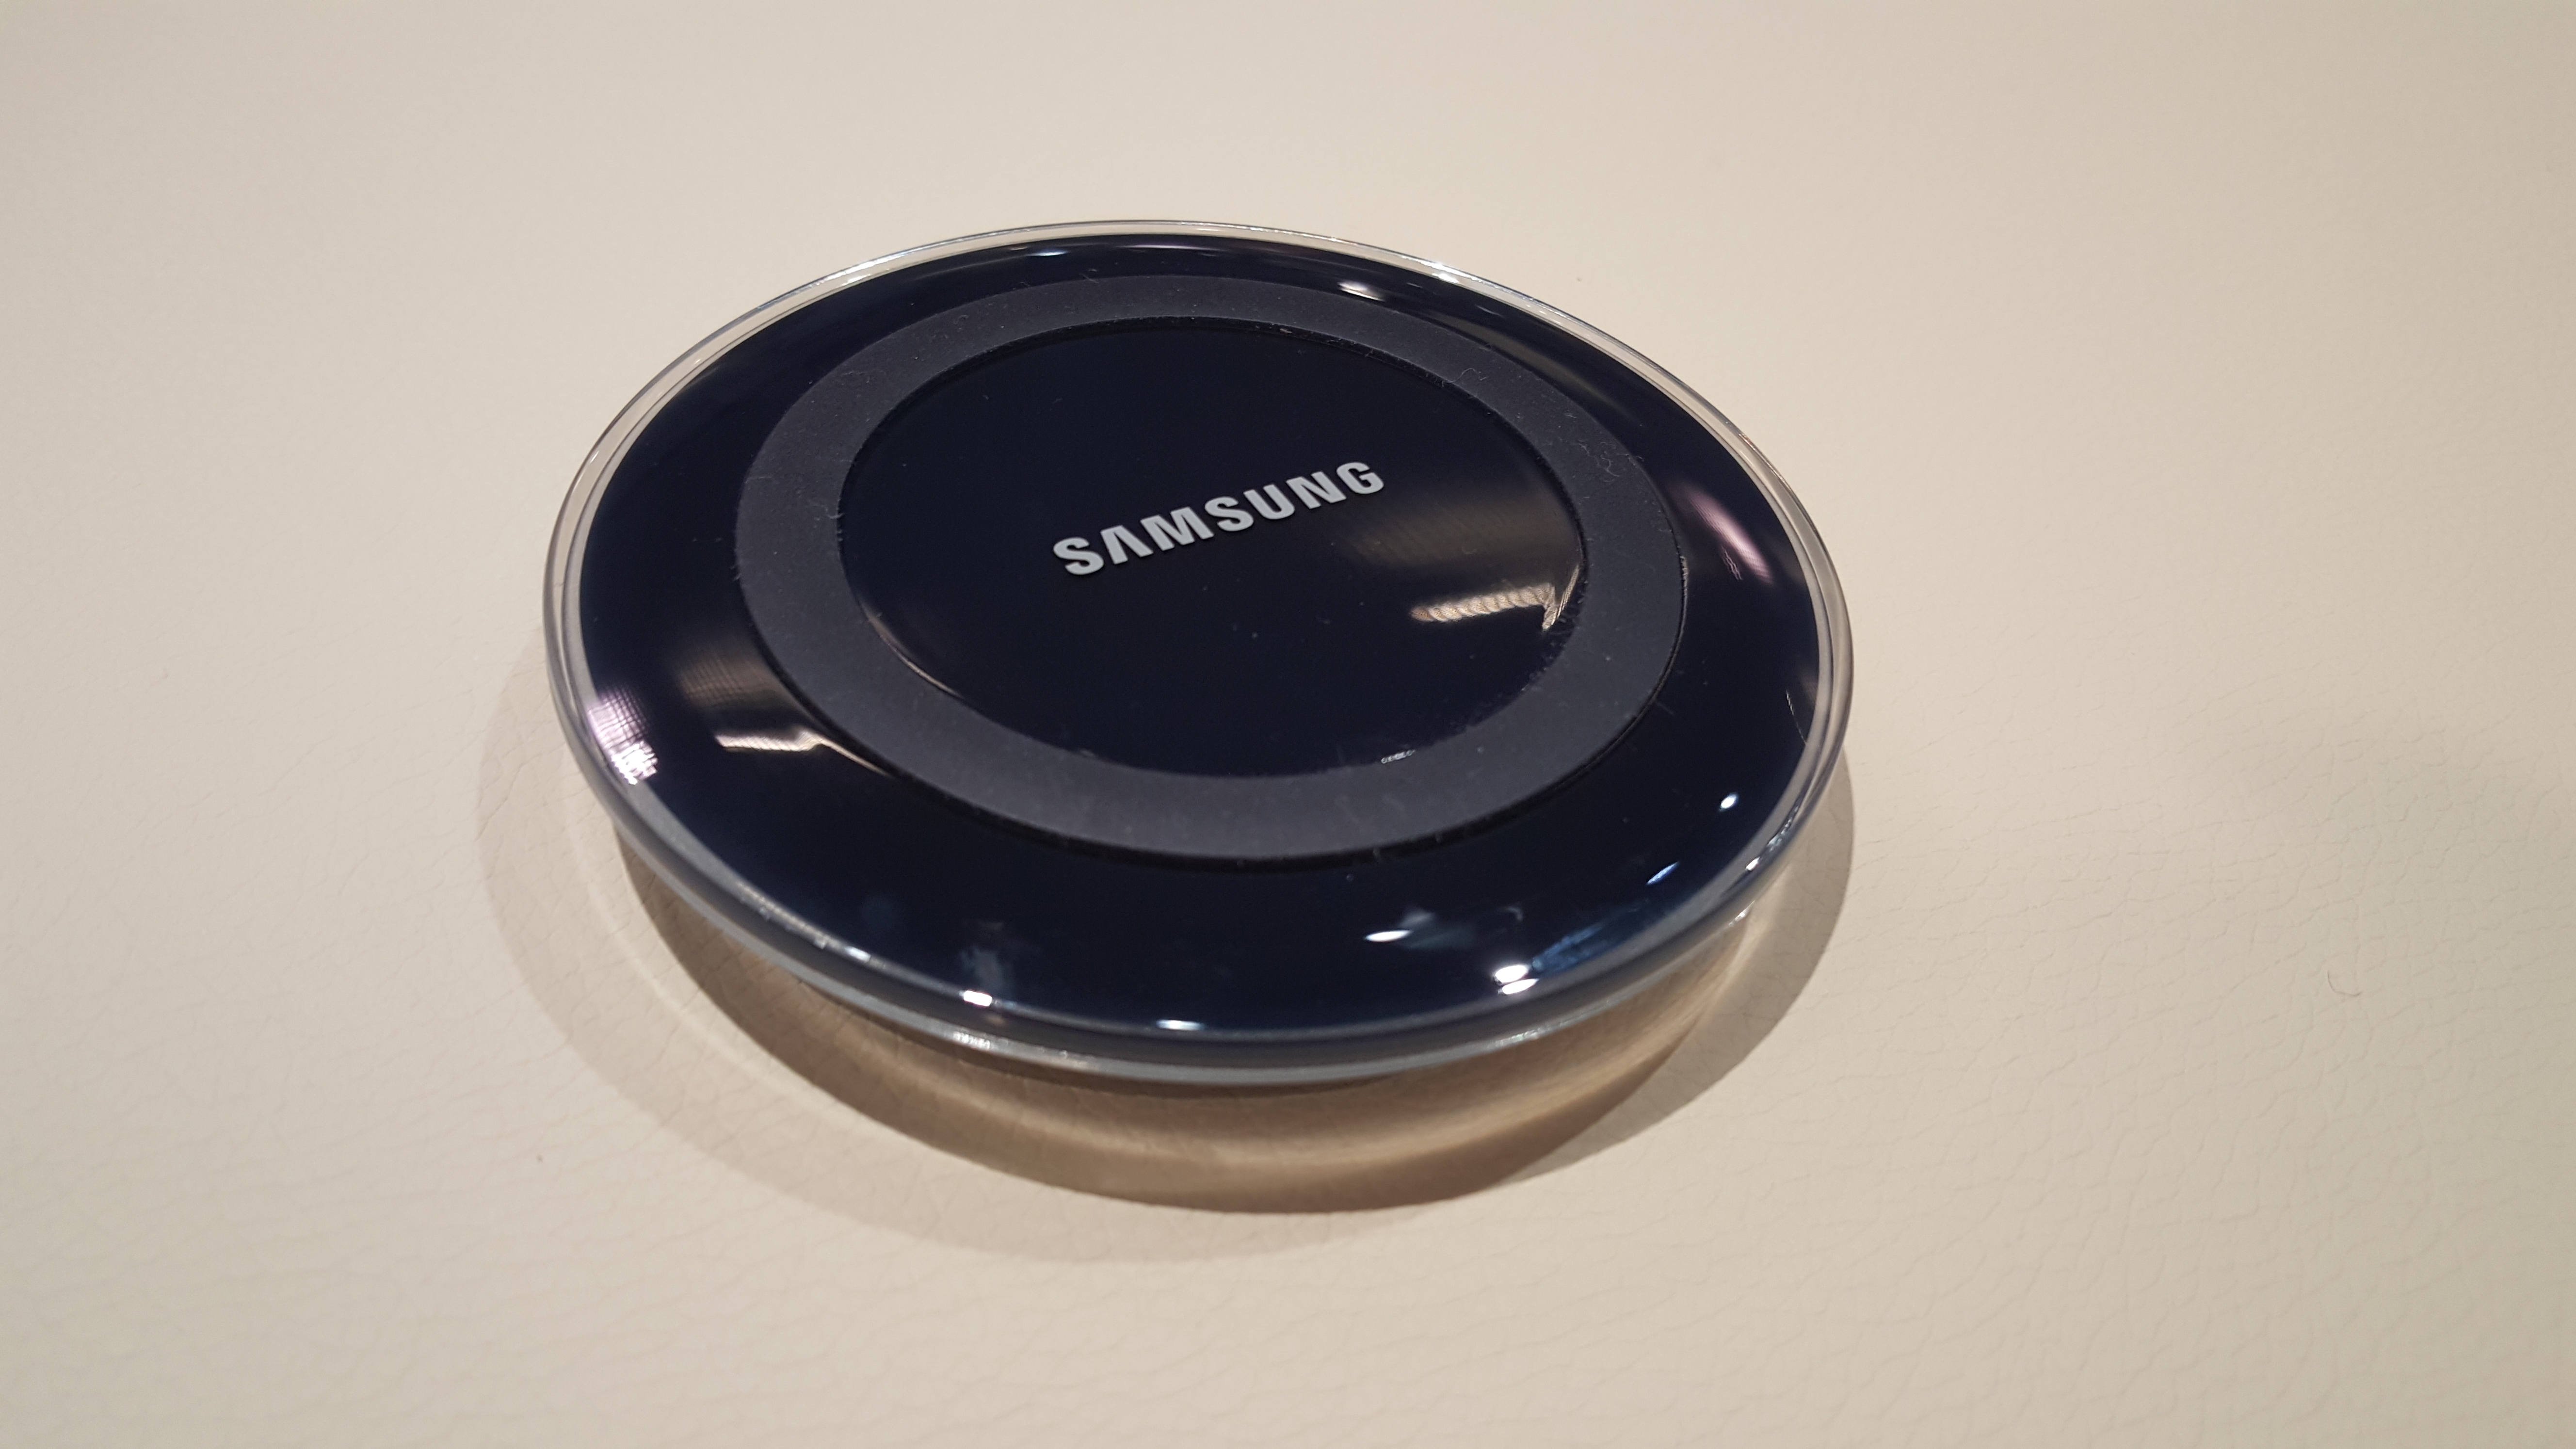 Samsung Galaxy S6 Edge MWC 2015 camera photo 2